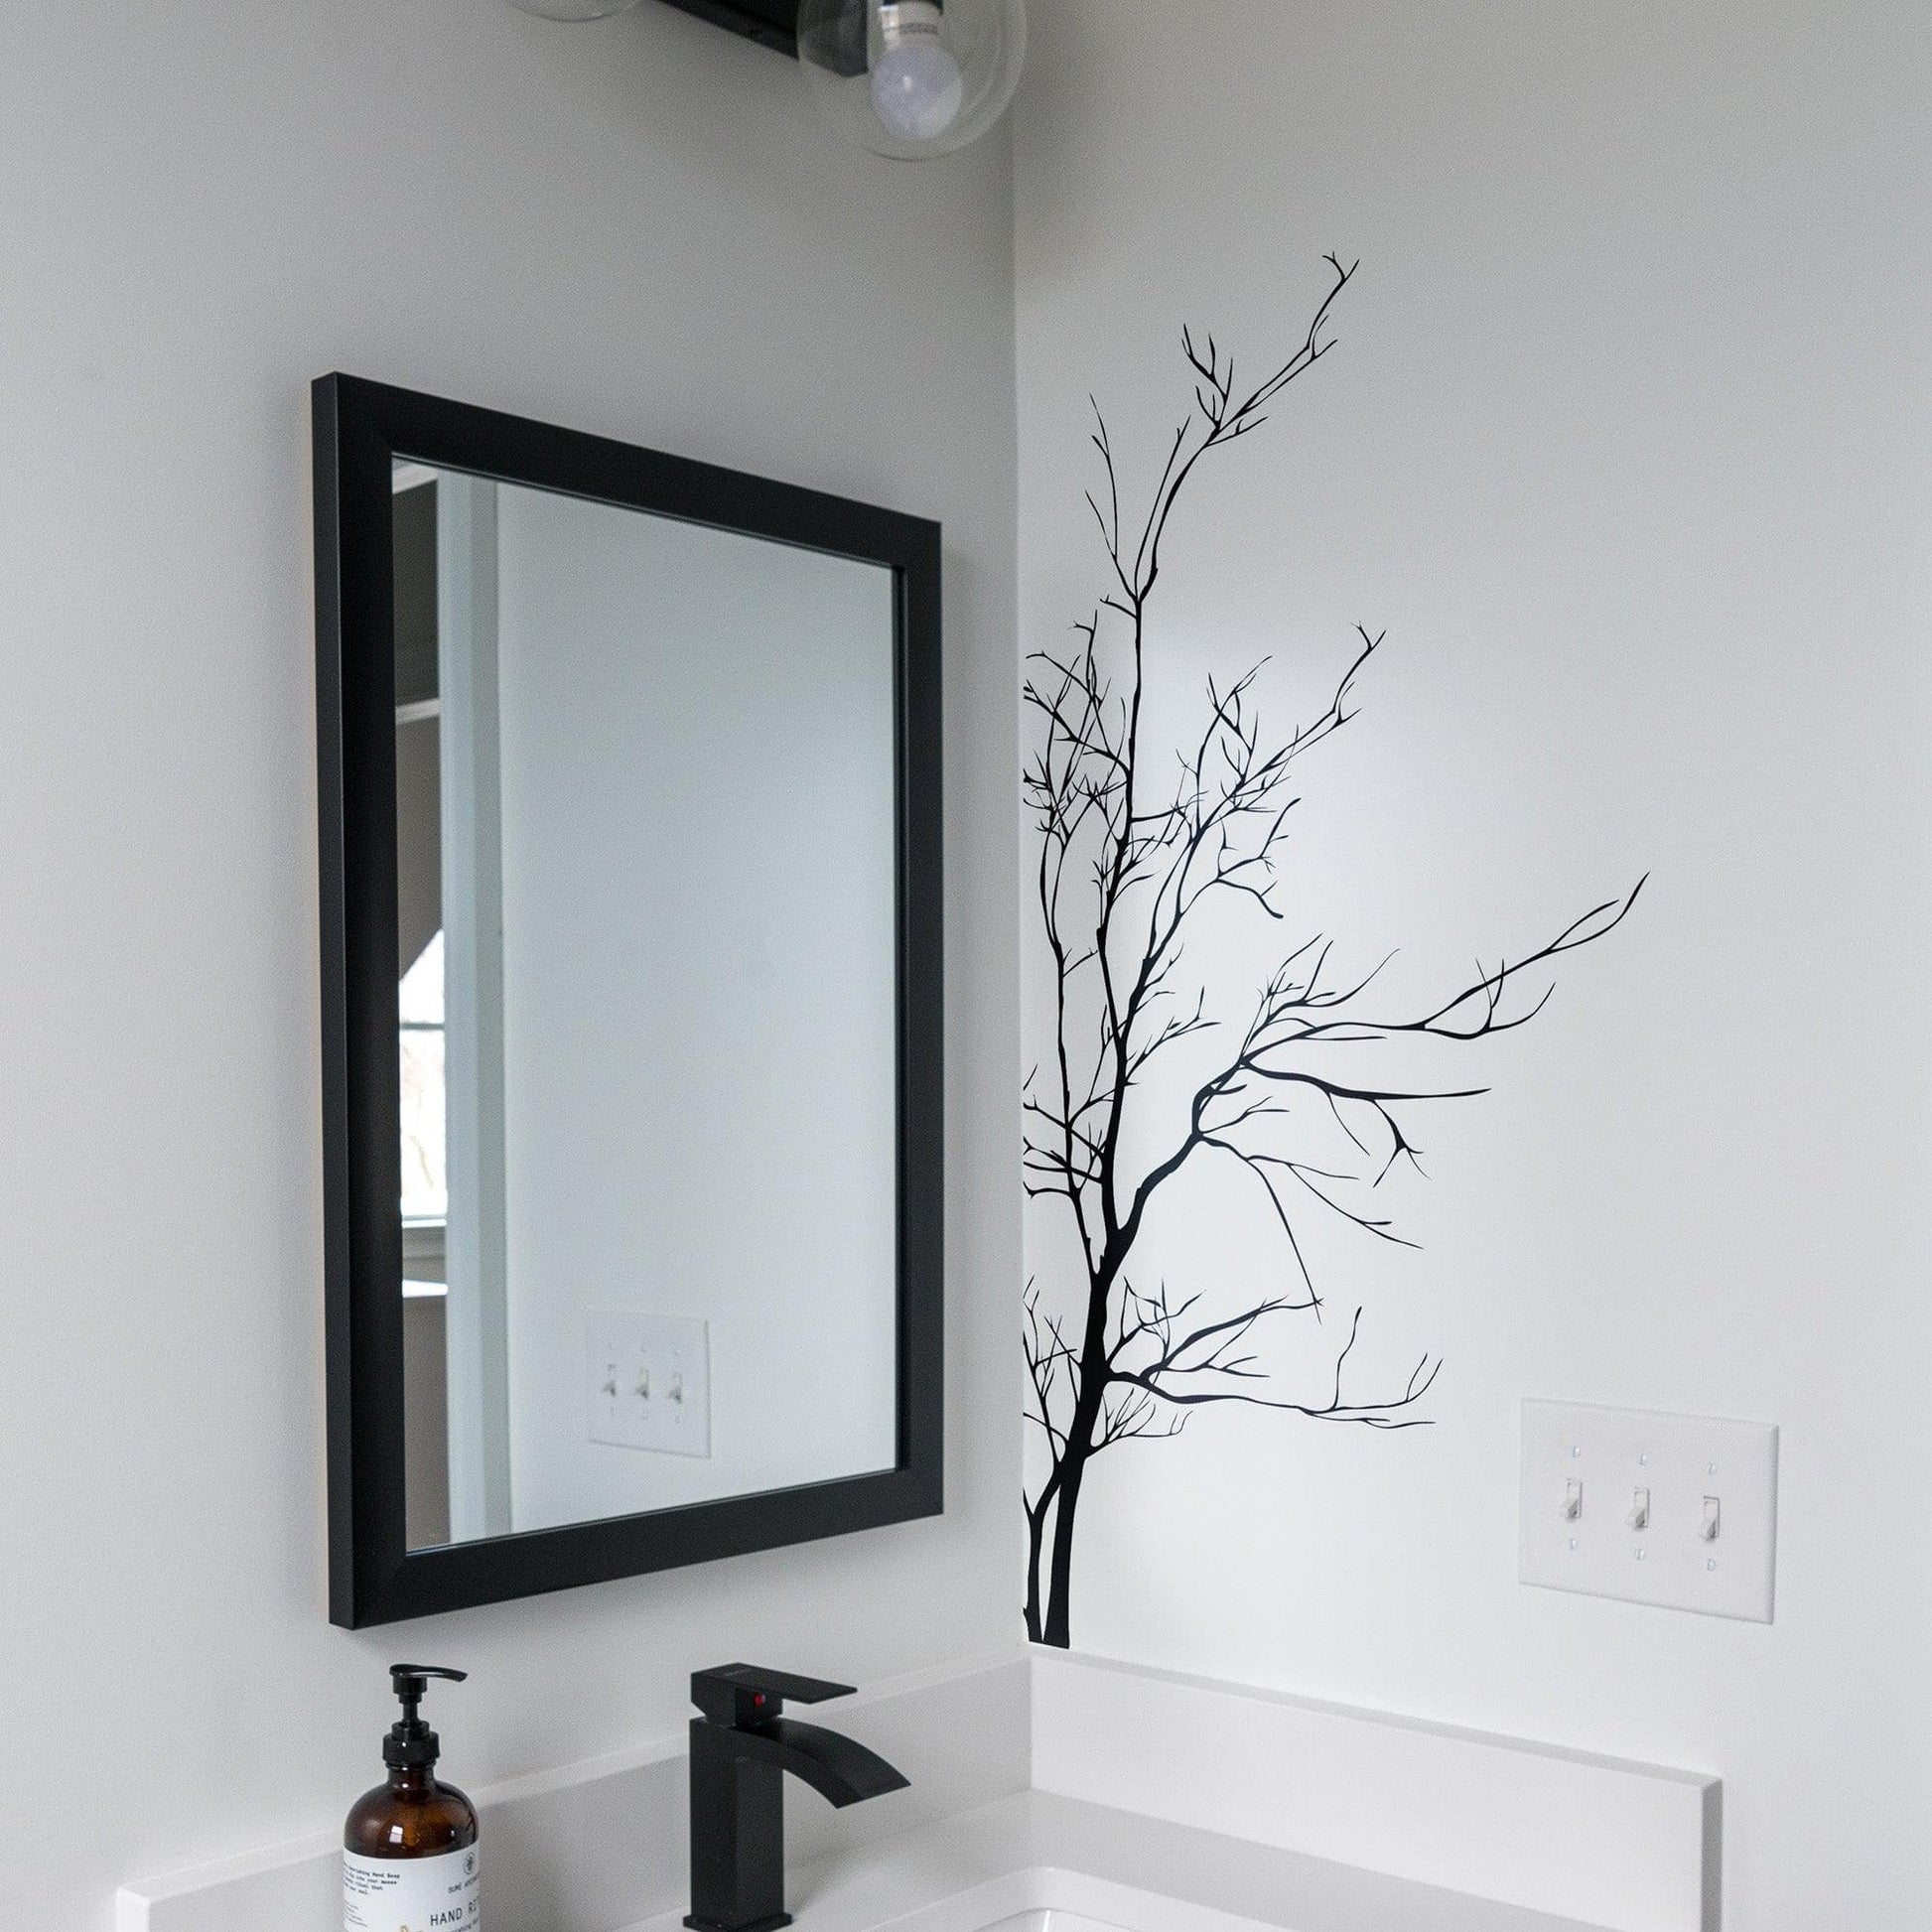 A black tree decal on a white wall in a bathroom near a mirror.